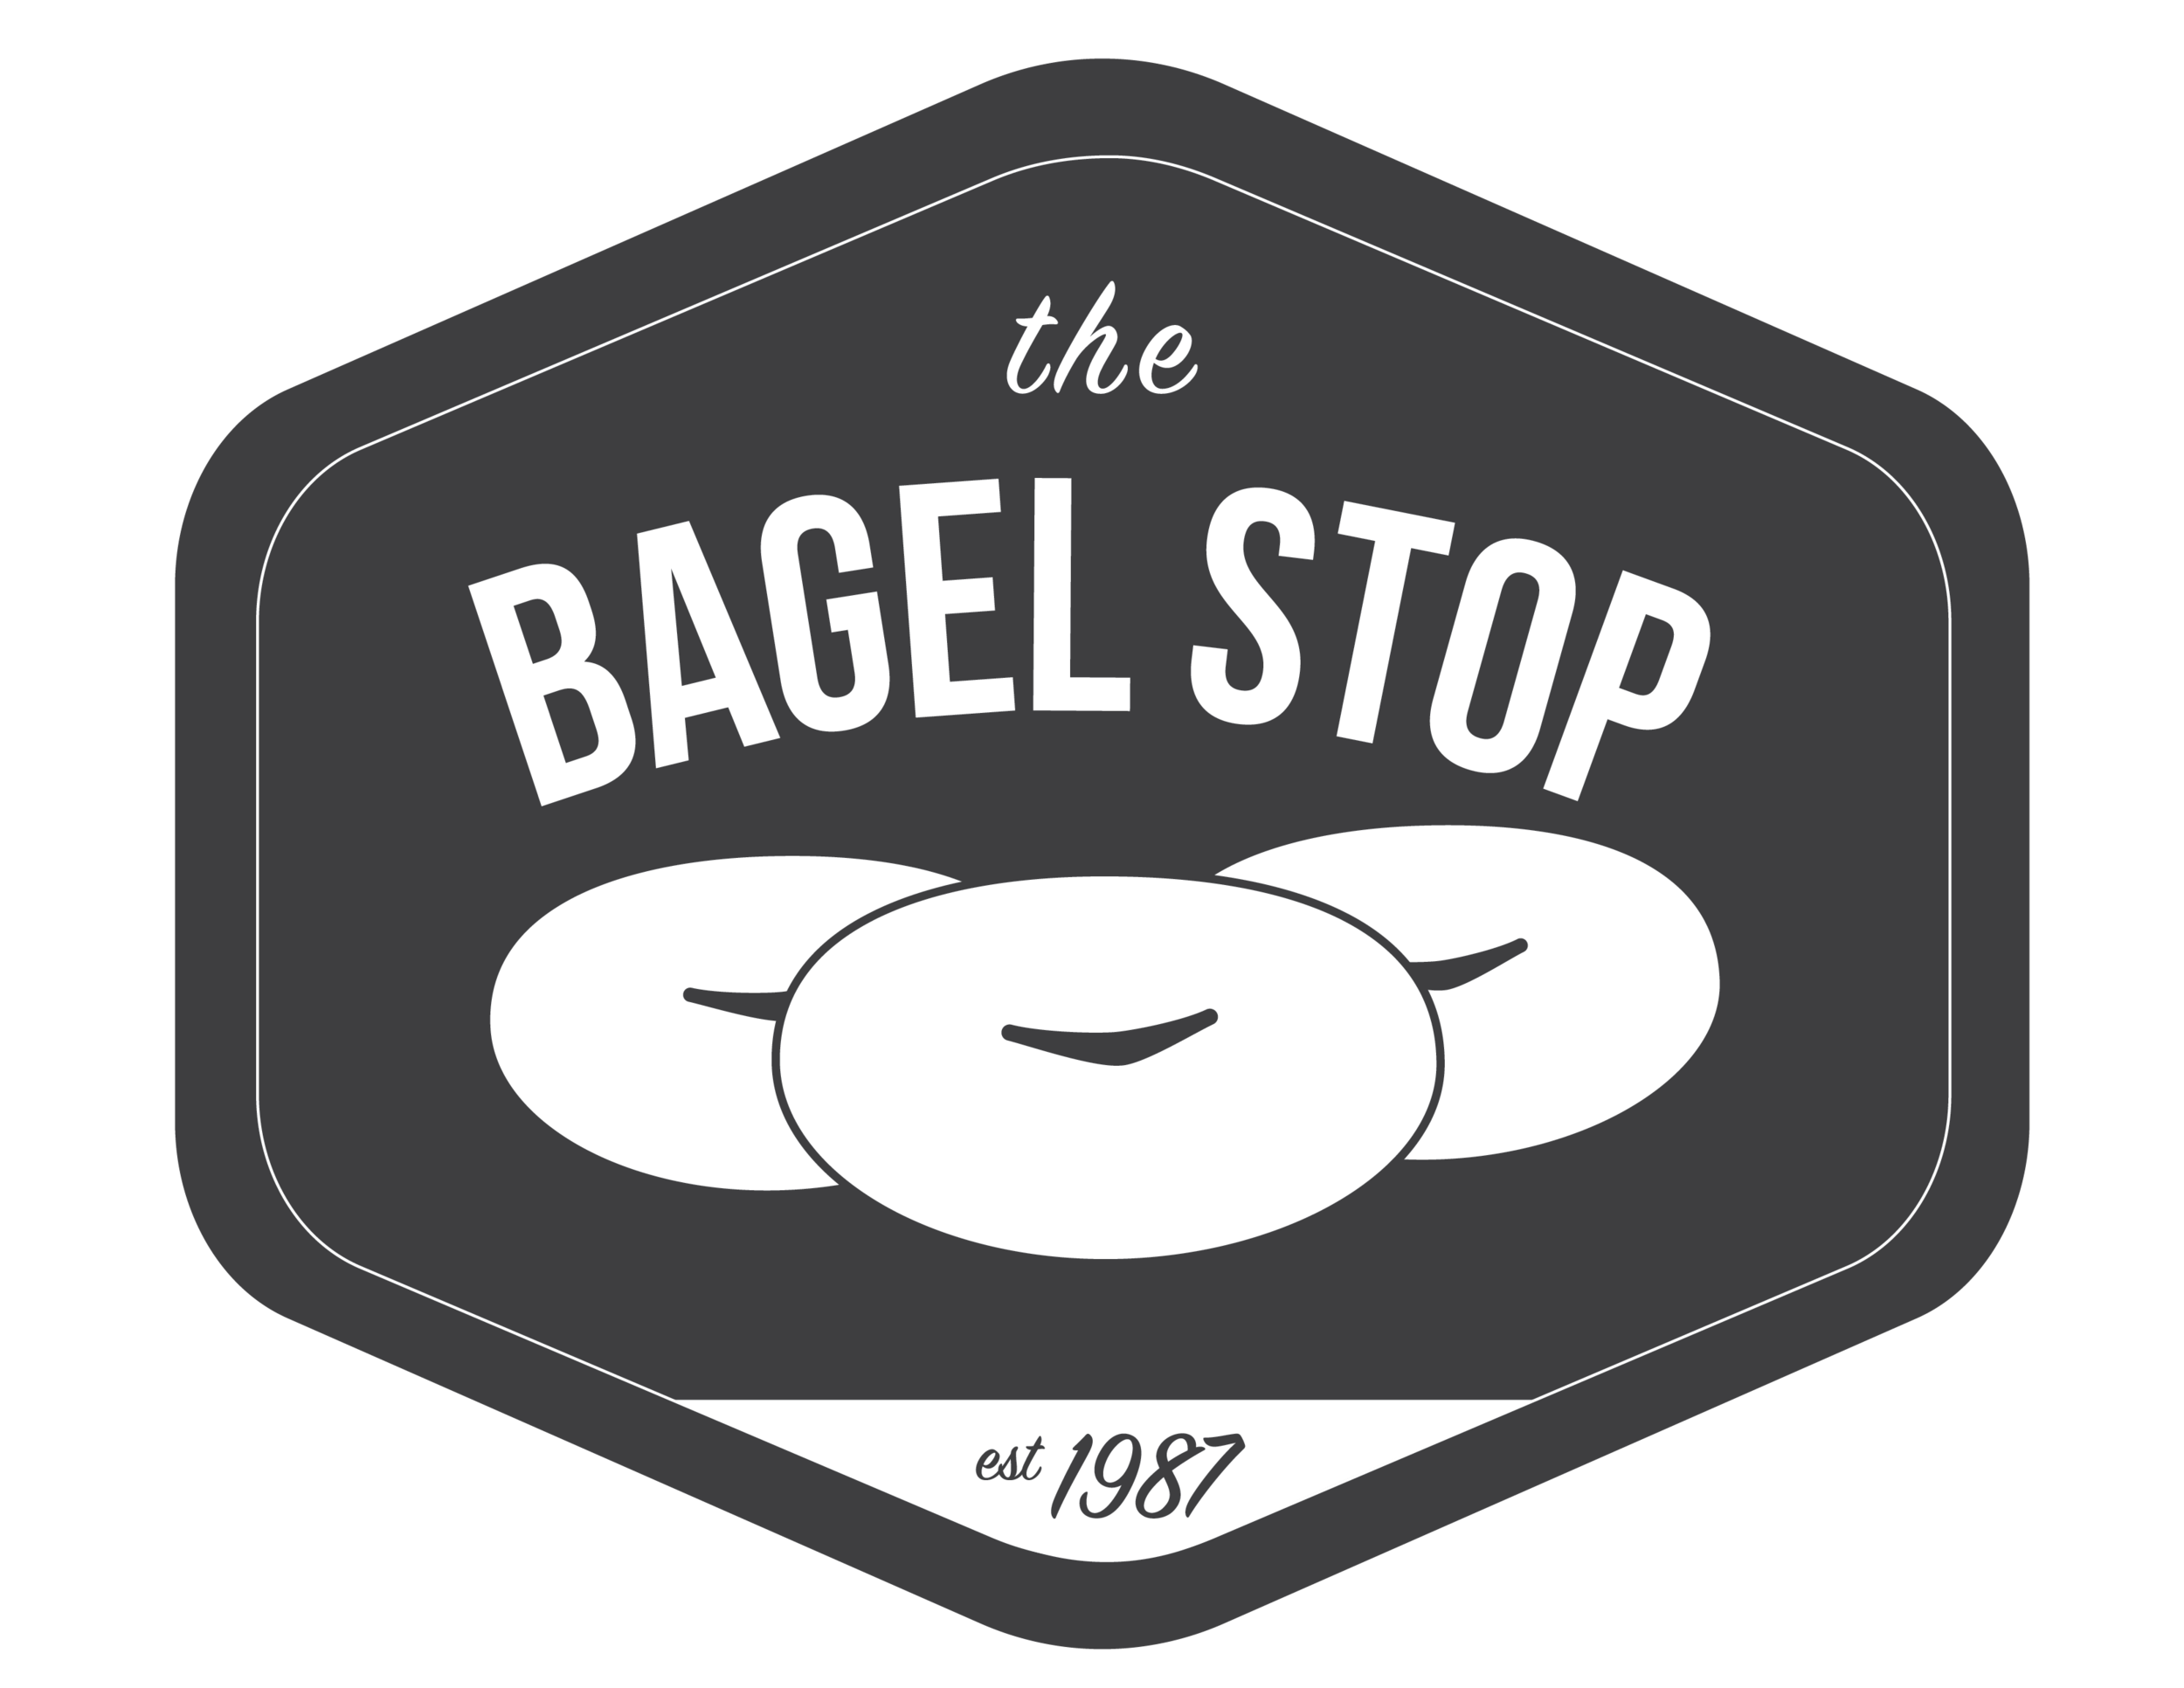 The Bagel Stop